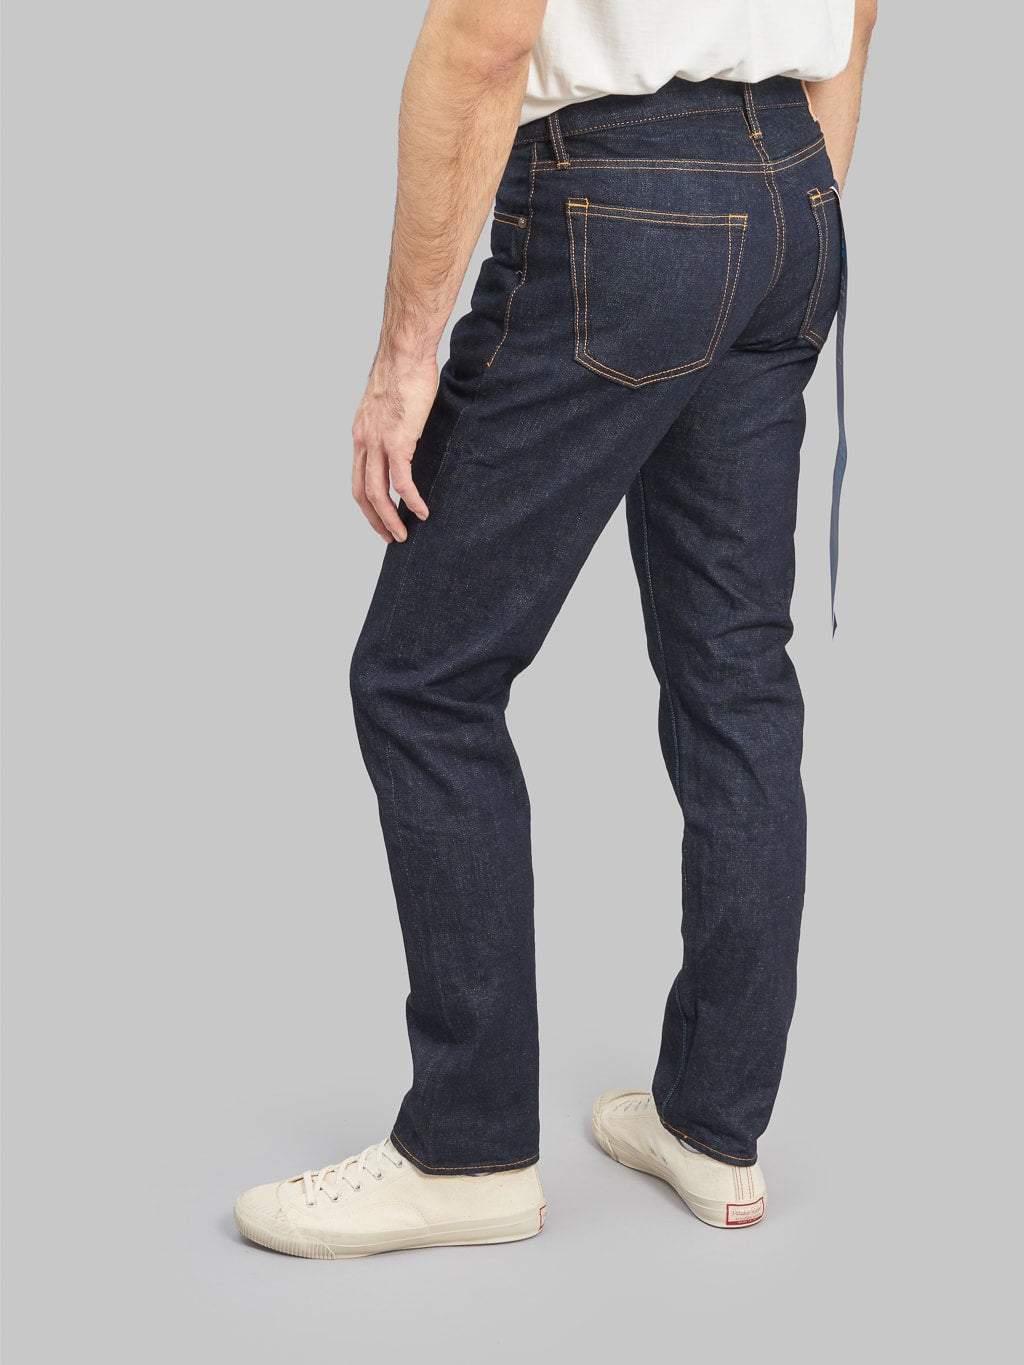 Japan Blue J301 US Cotton Circle Straight Jeans style